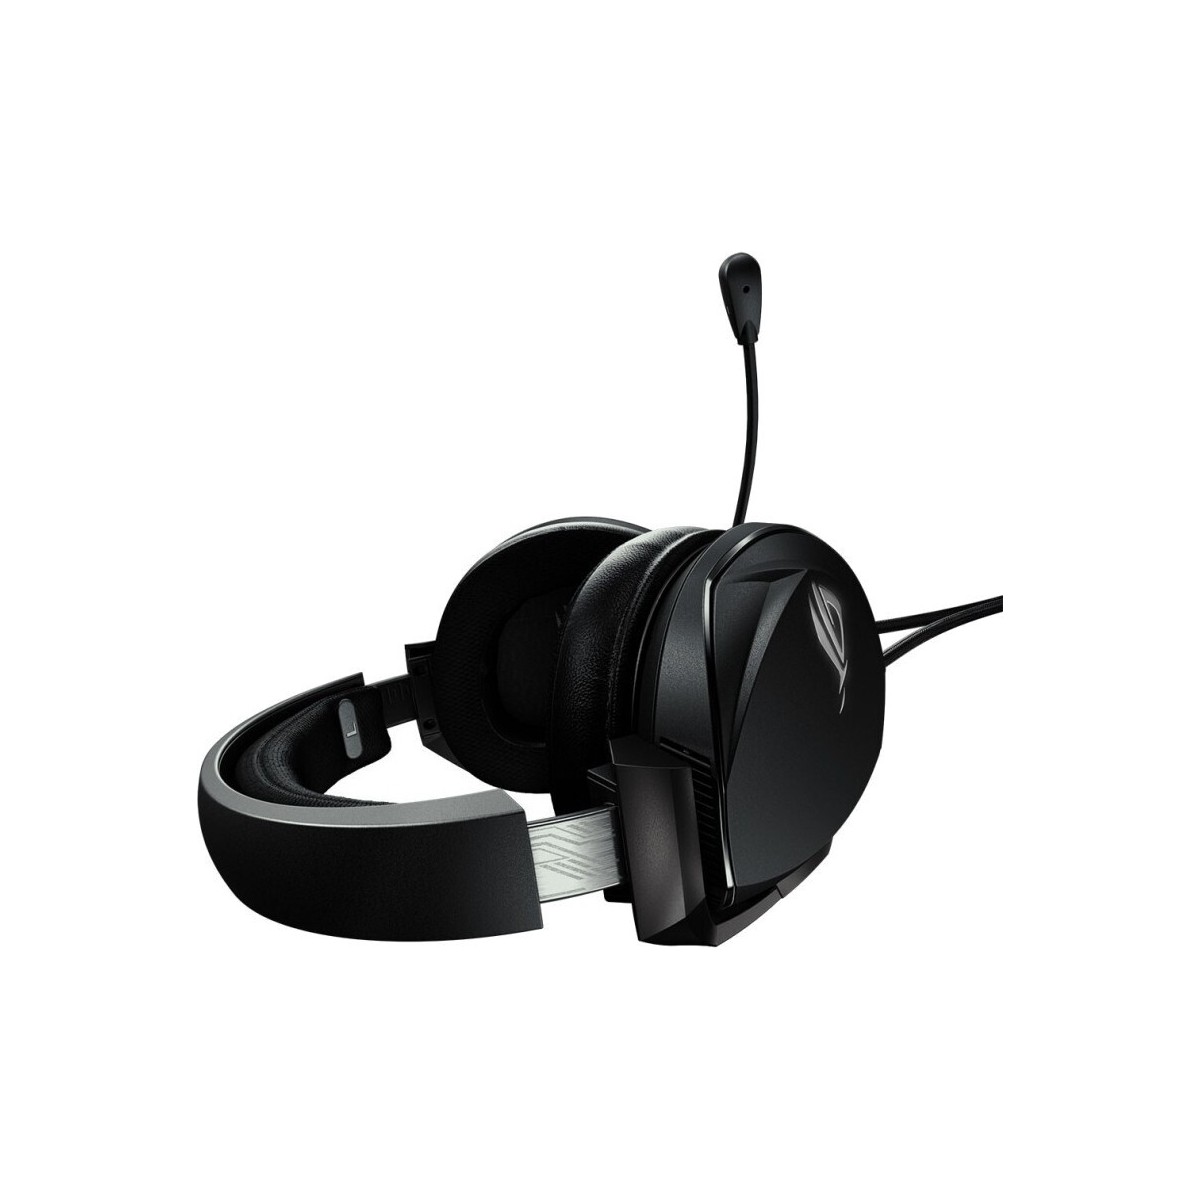 ASUS ROG Theta Electret - Headset - Head-band - Gaming - Black - Binaural - 1.5 m